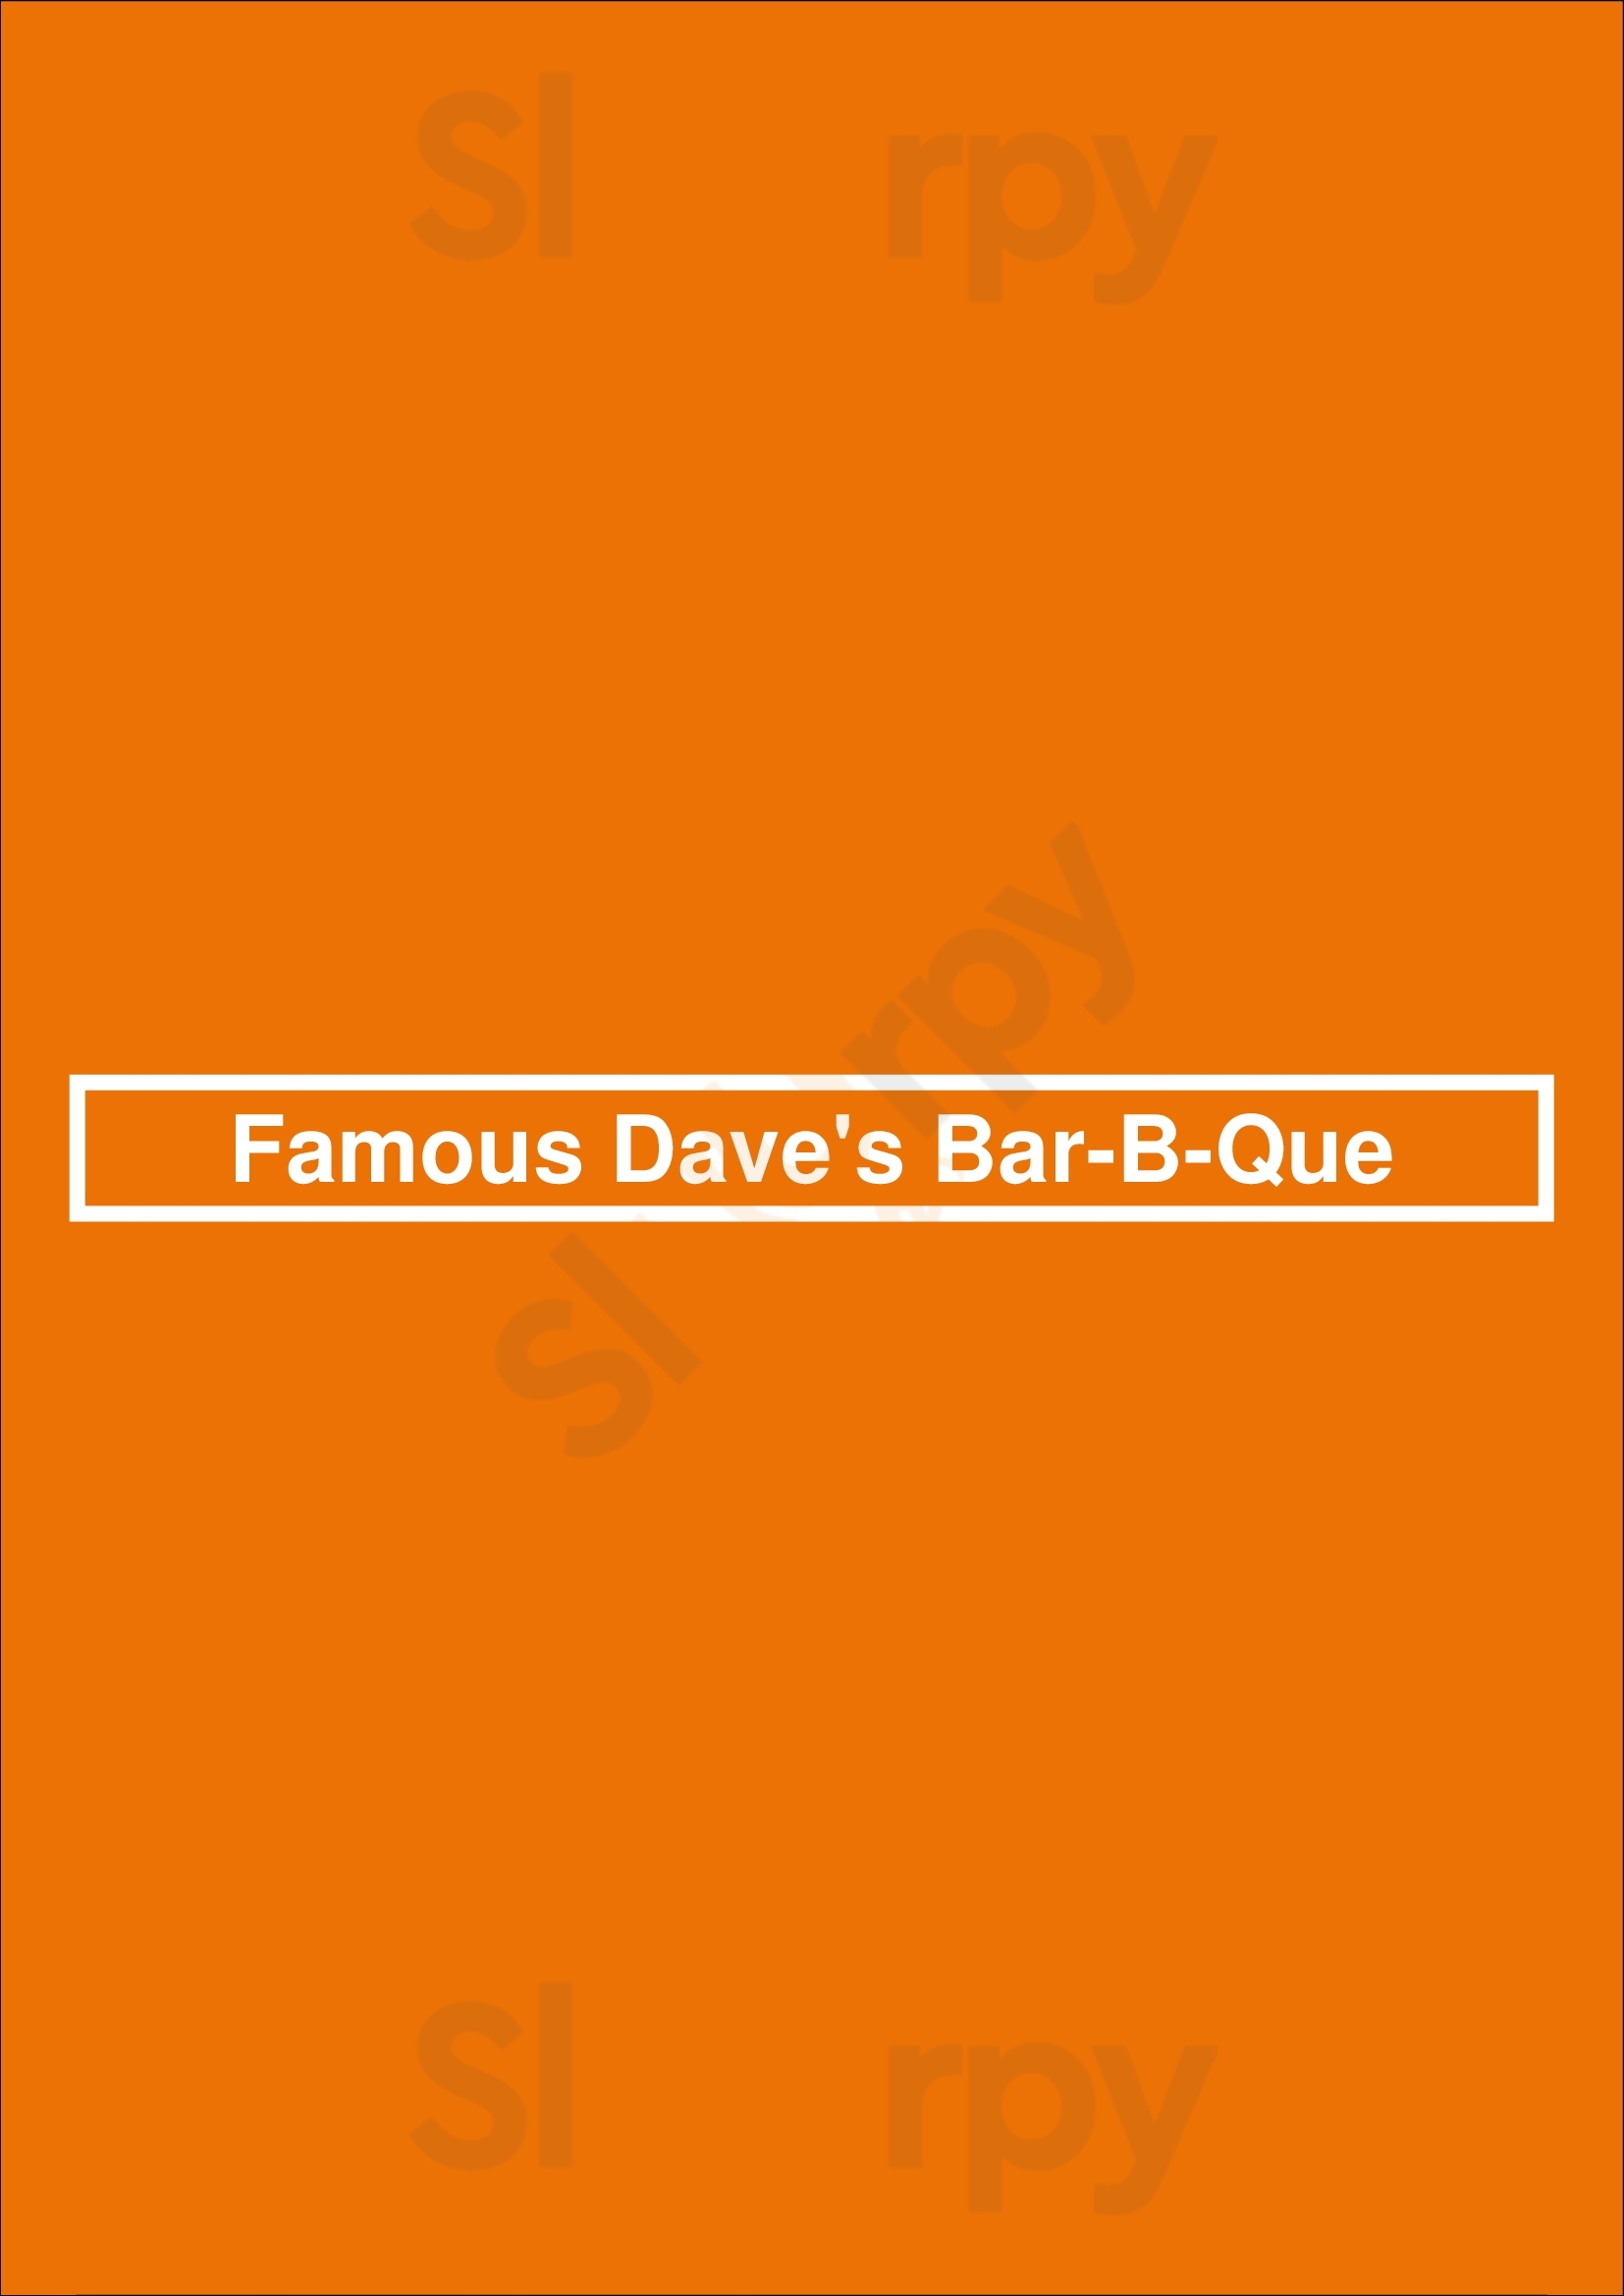 Famous Dave's Bar-b-que Novi Menu - 1